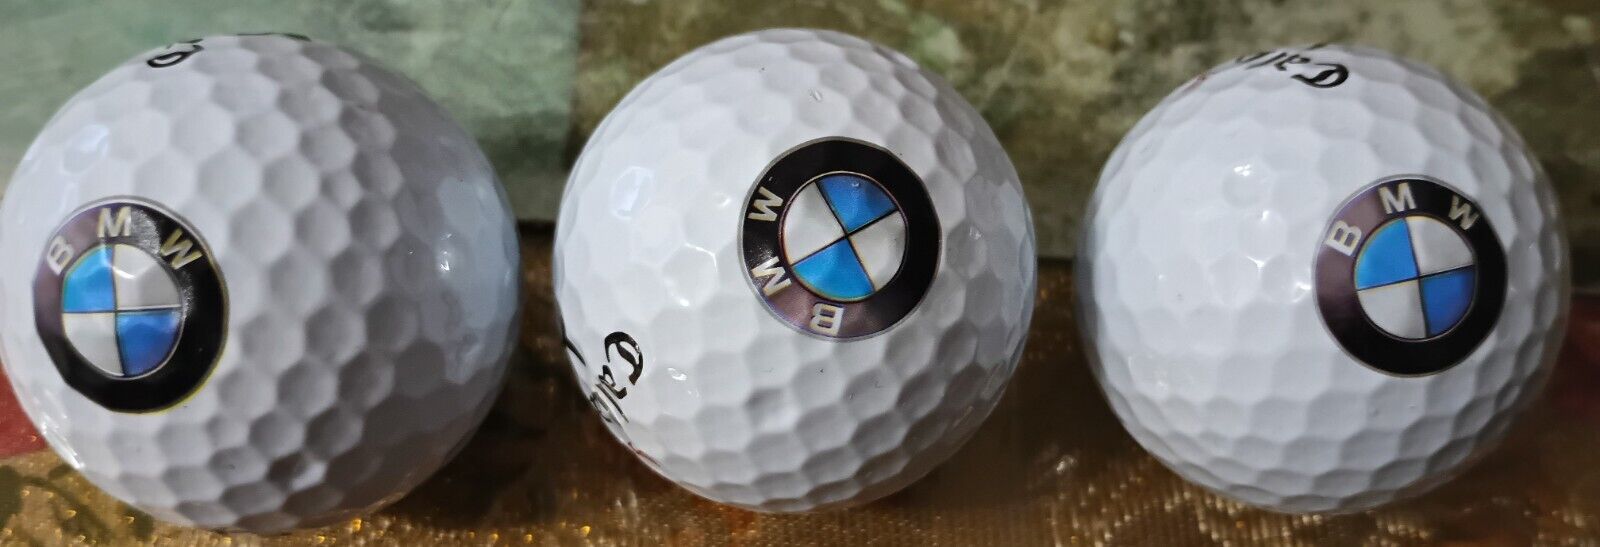 Callaway Tour i(s) BMW edition, 3golf balls